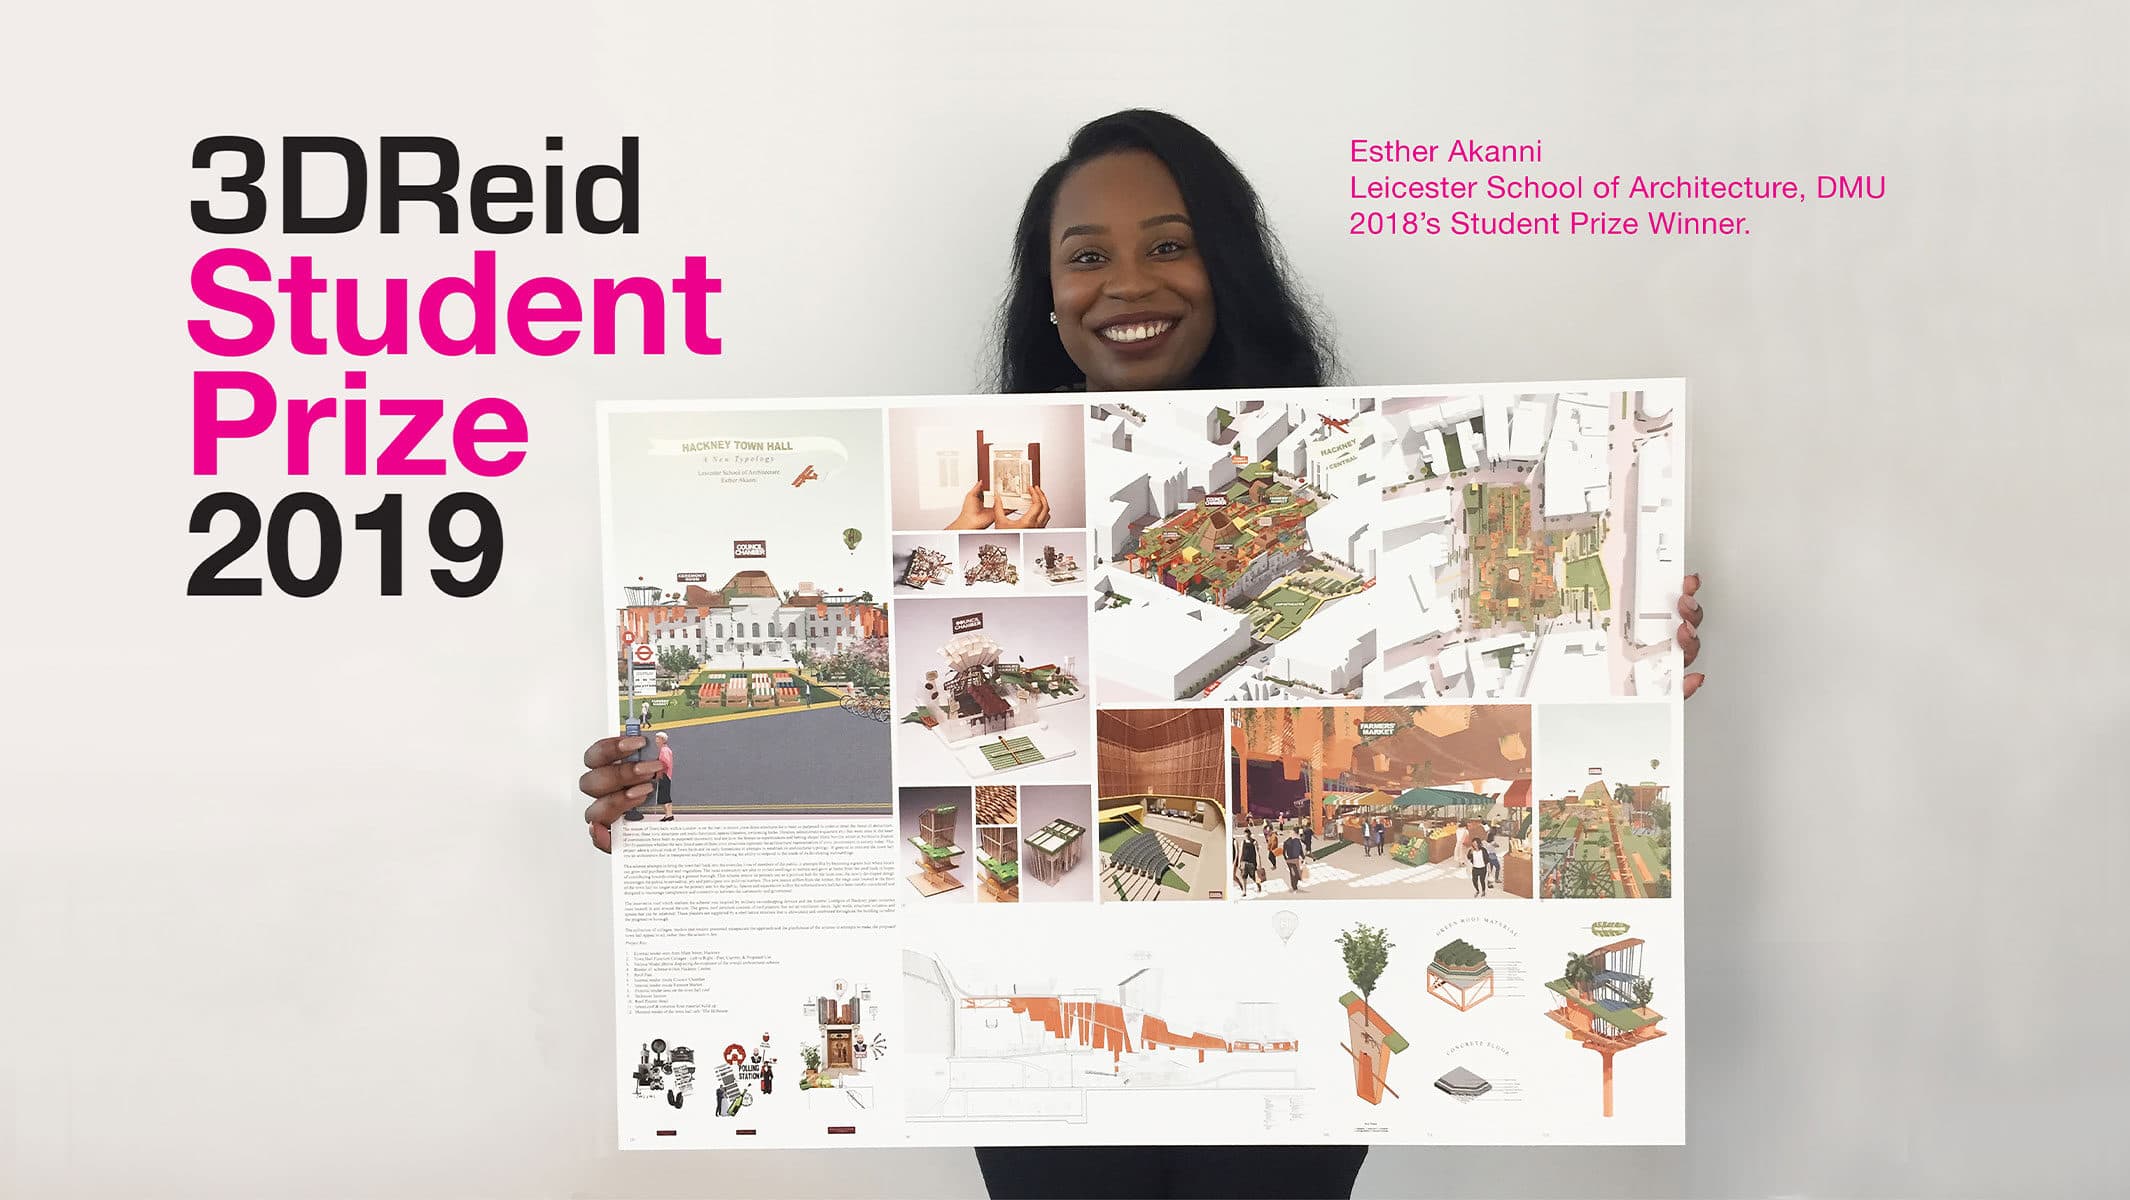 3DReid Student Prize 2018 Winner